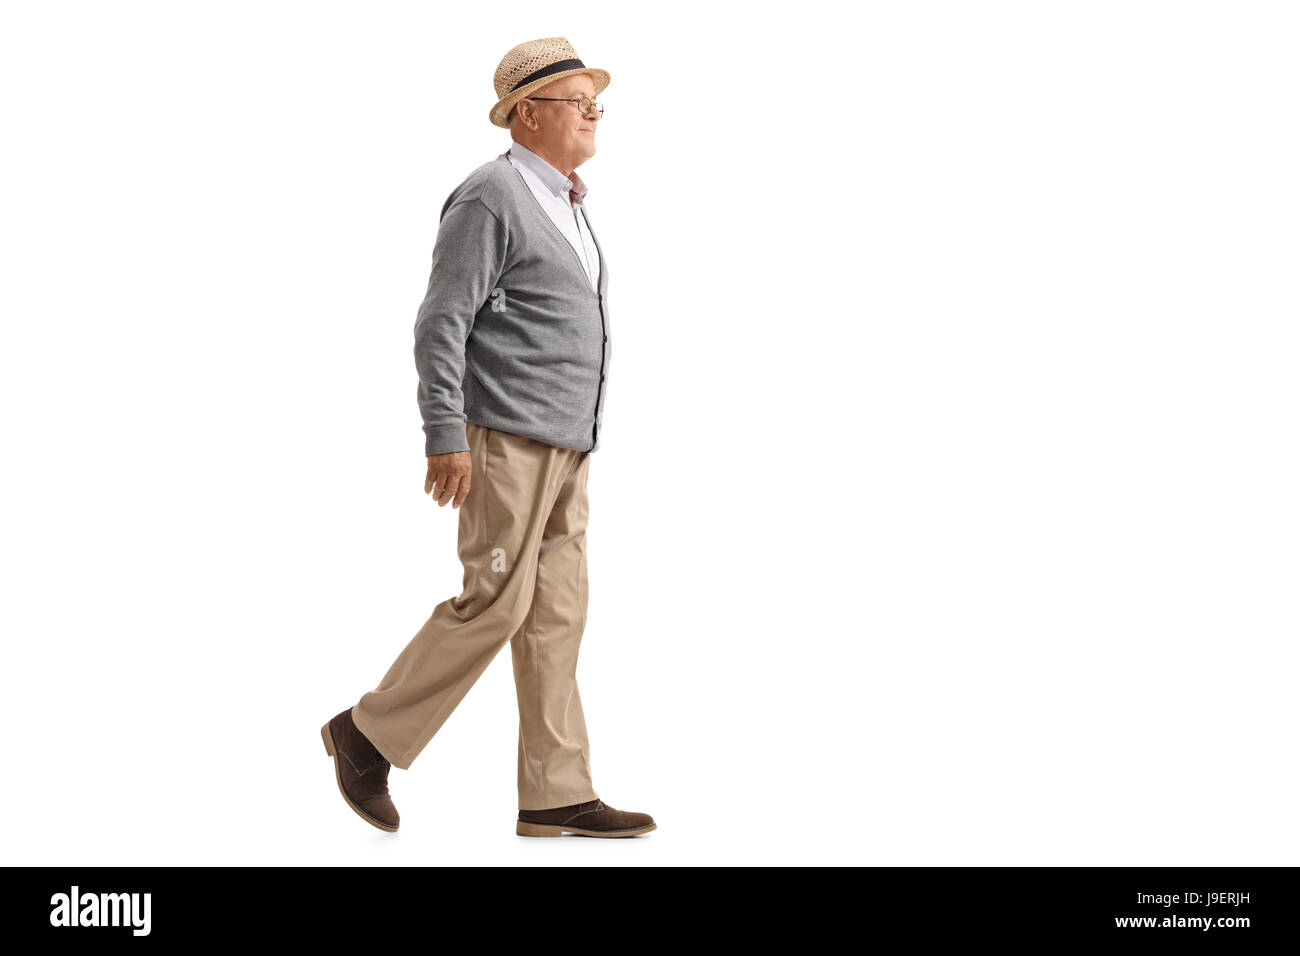 Full length profile shot of an elderly man walking and smiling